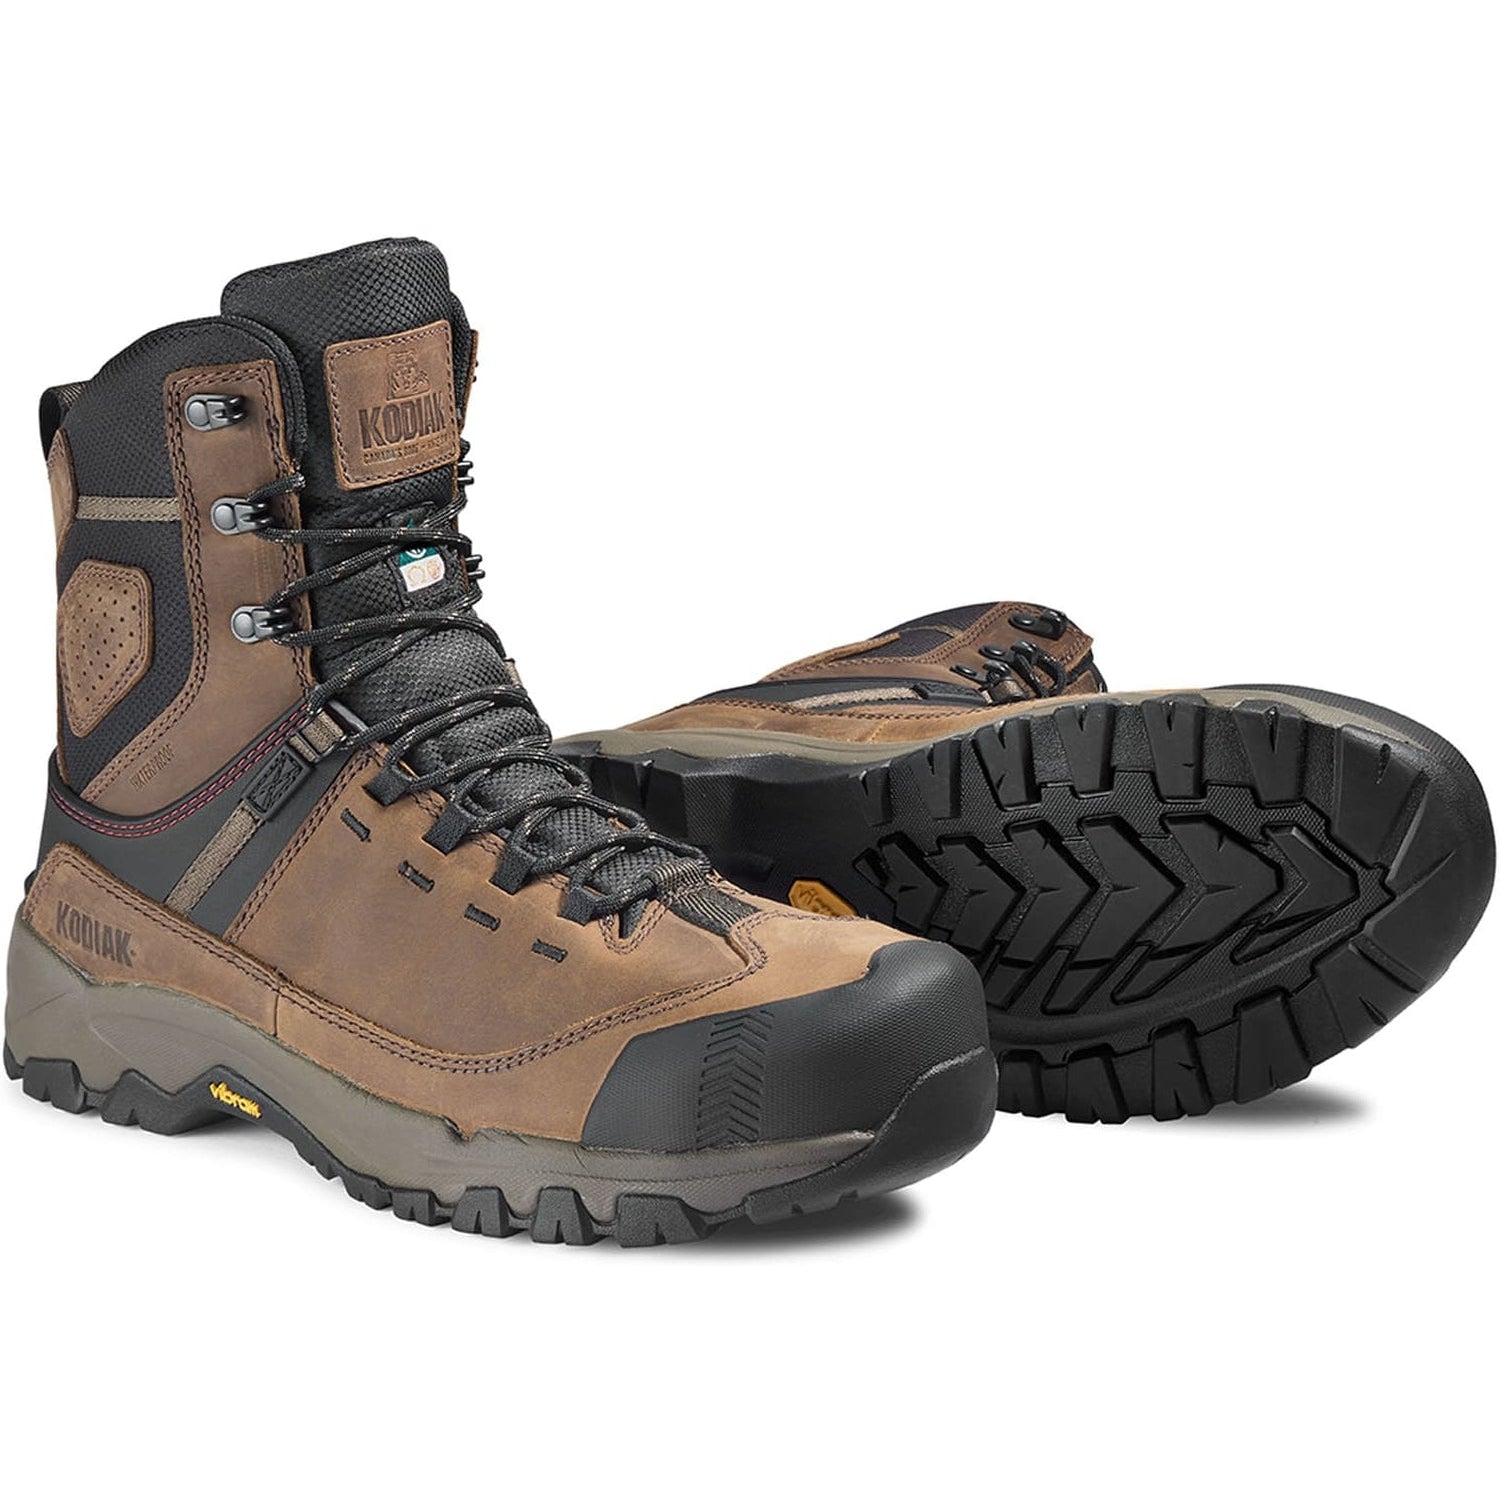 Kodiak Men's Quest Bound 8" Comp Toe WP Safety Work Boot -Brown- 4THHBN  - Overlook Boots